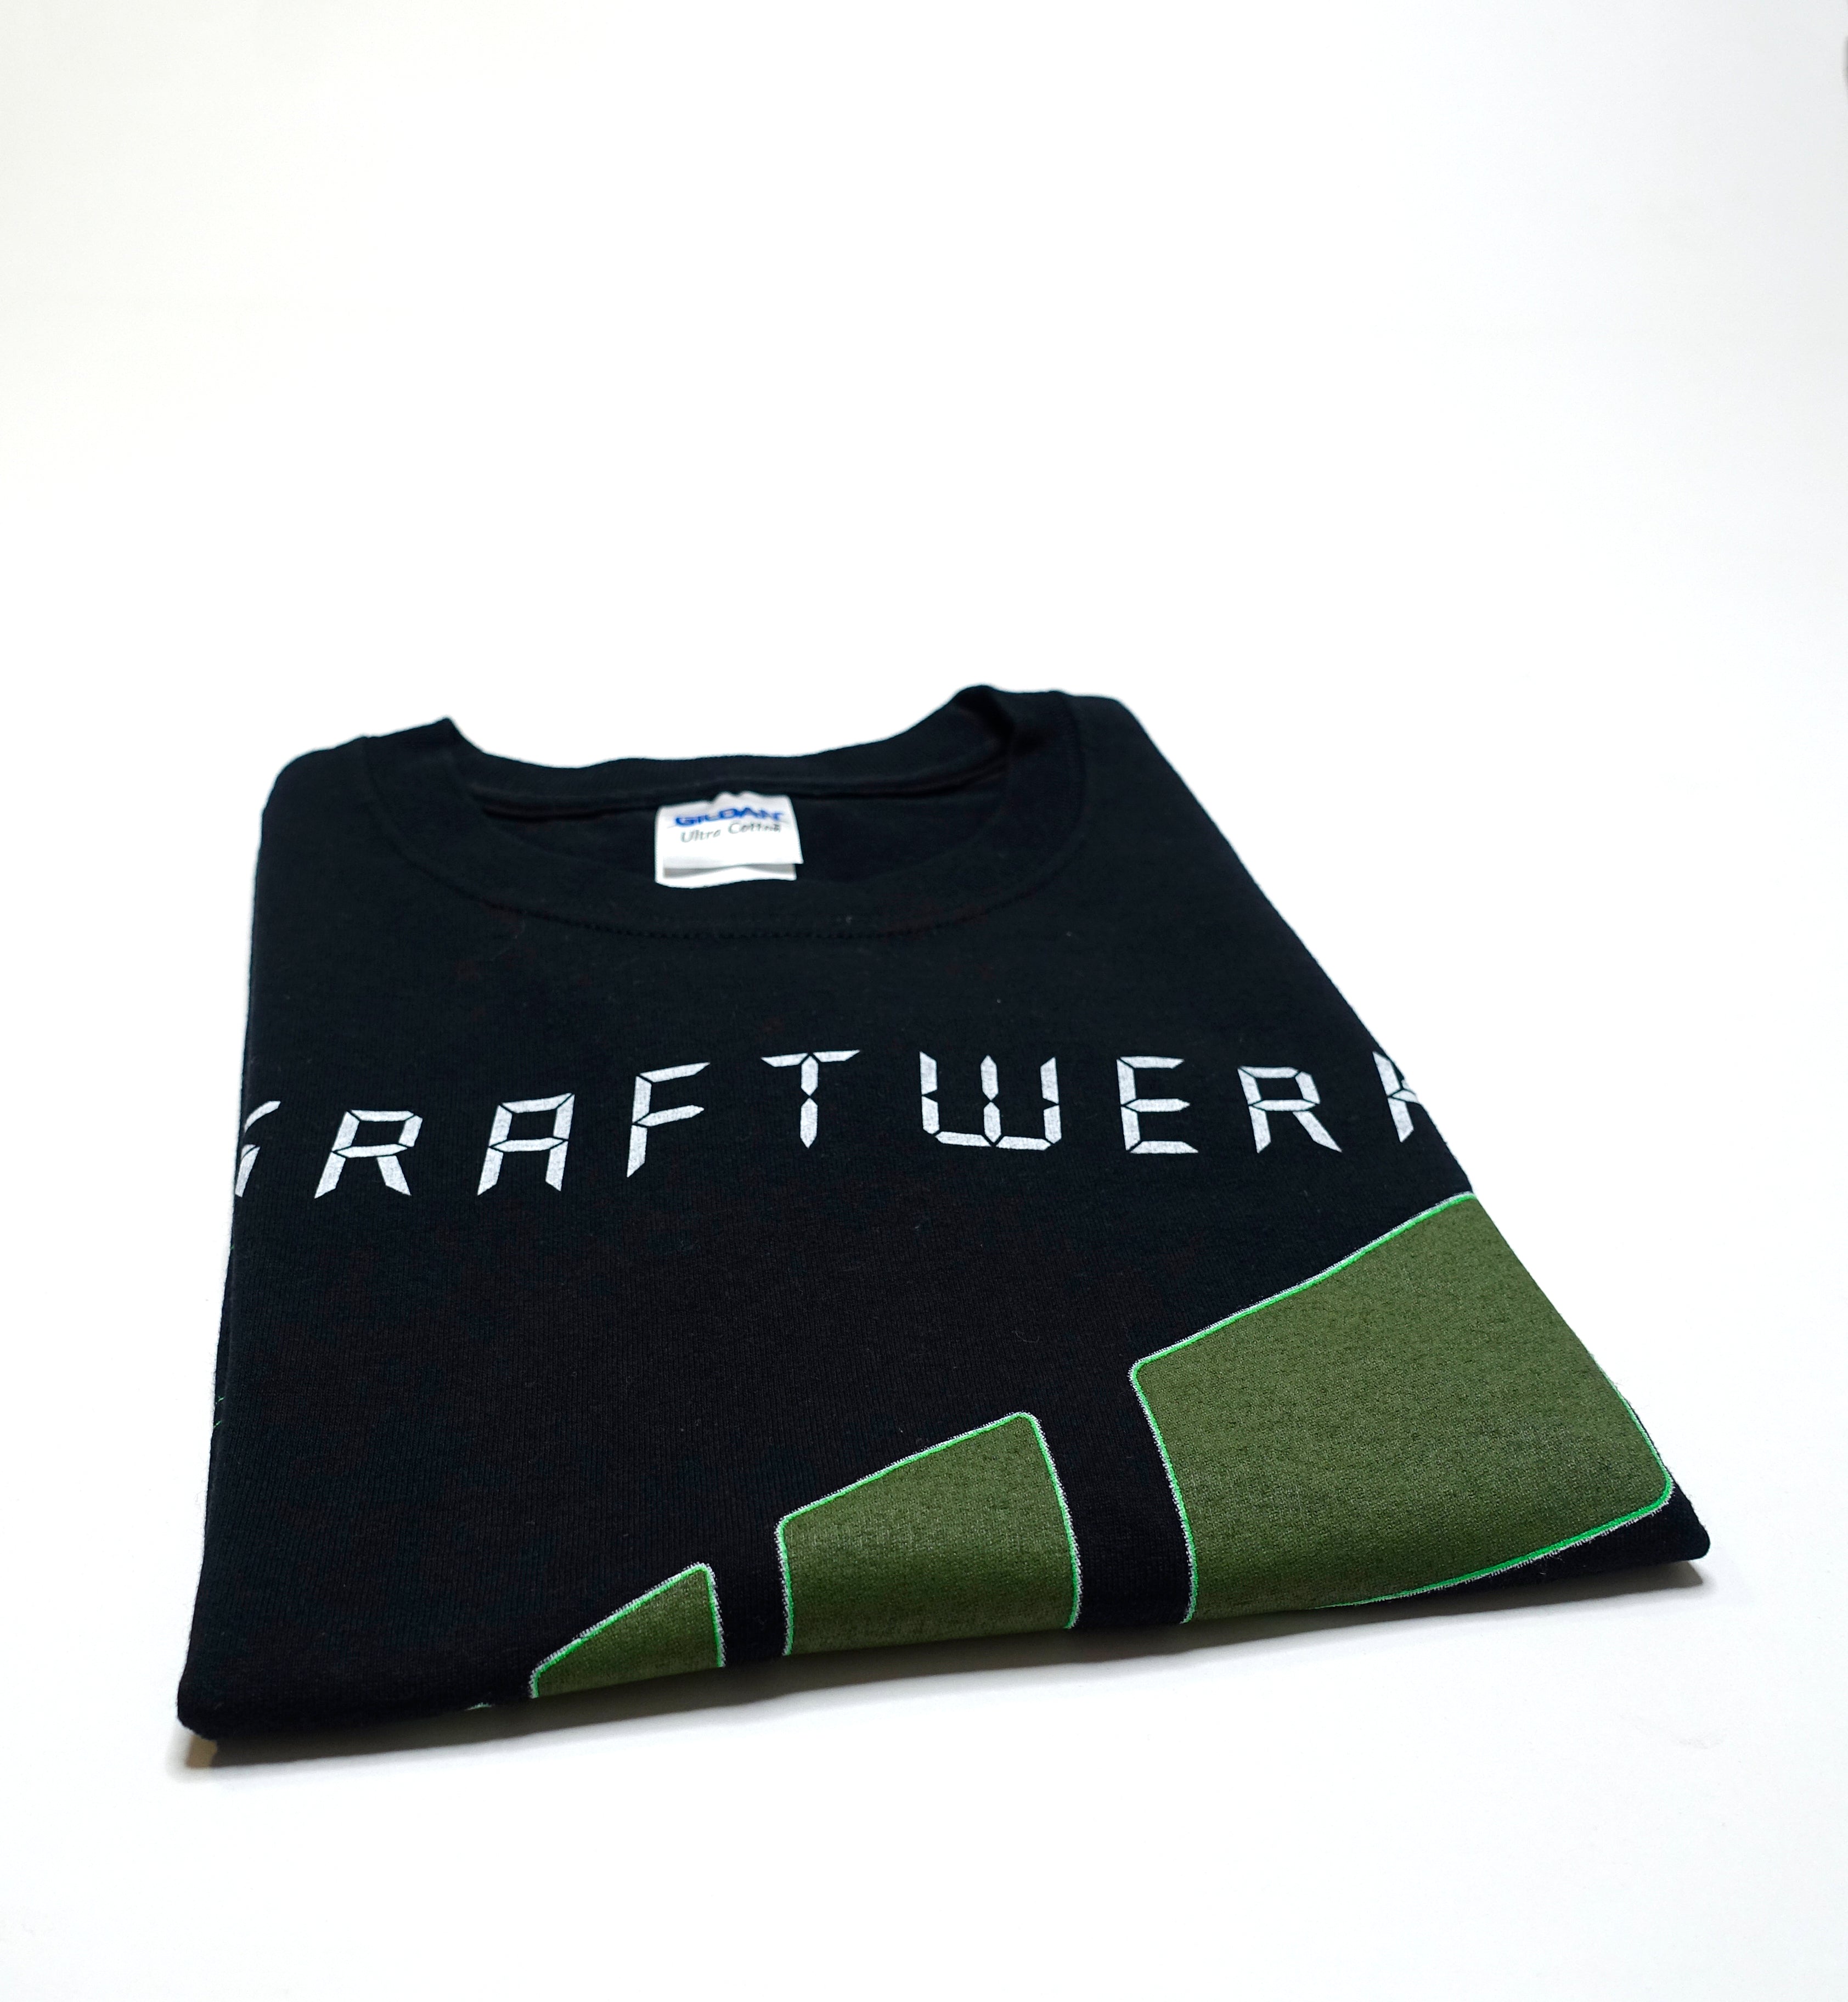 Kraftwerk - 2016 3D Tour Shirt Size Large